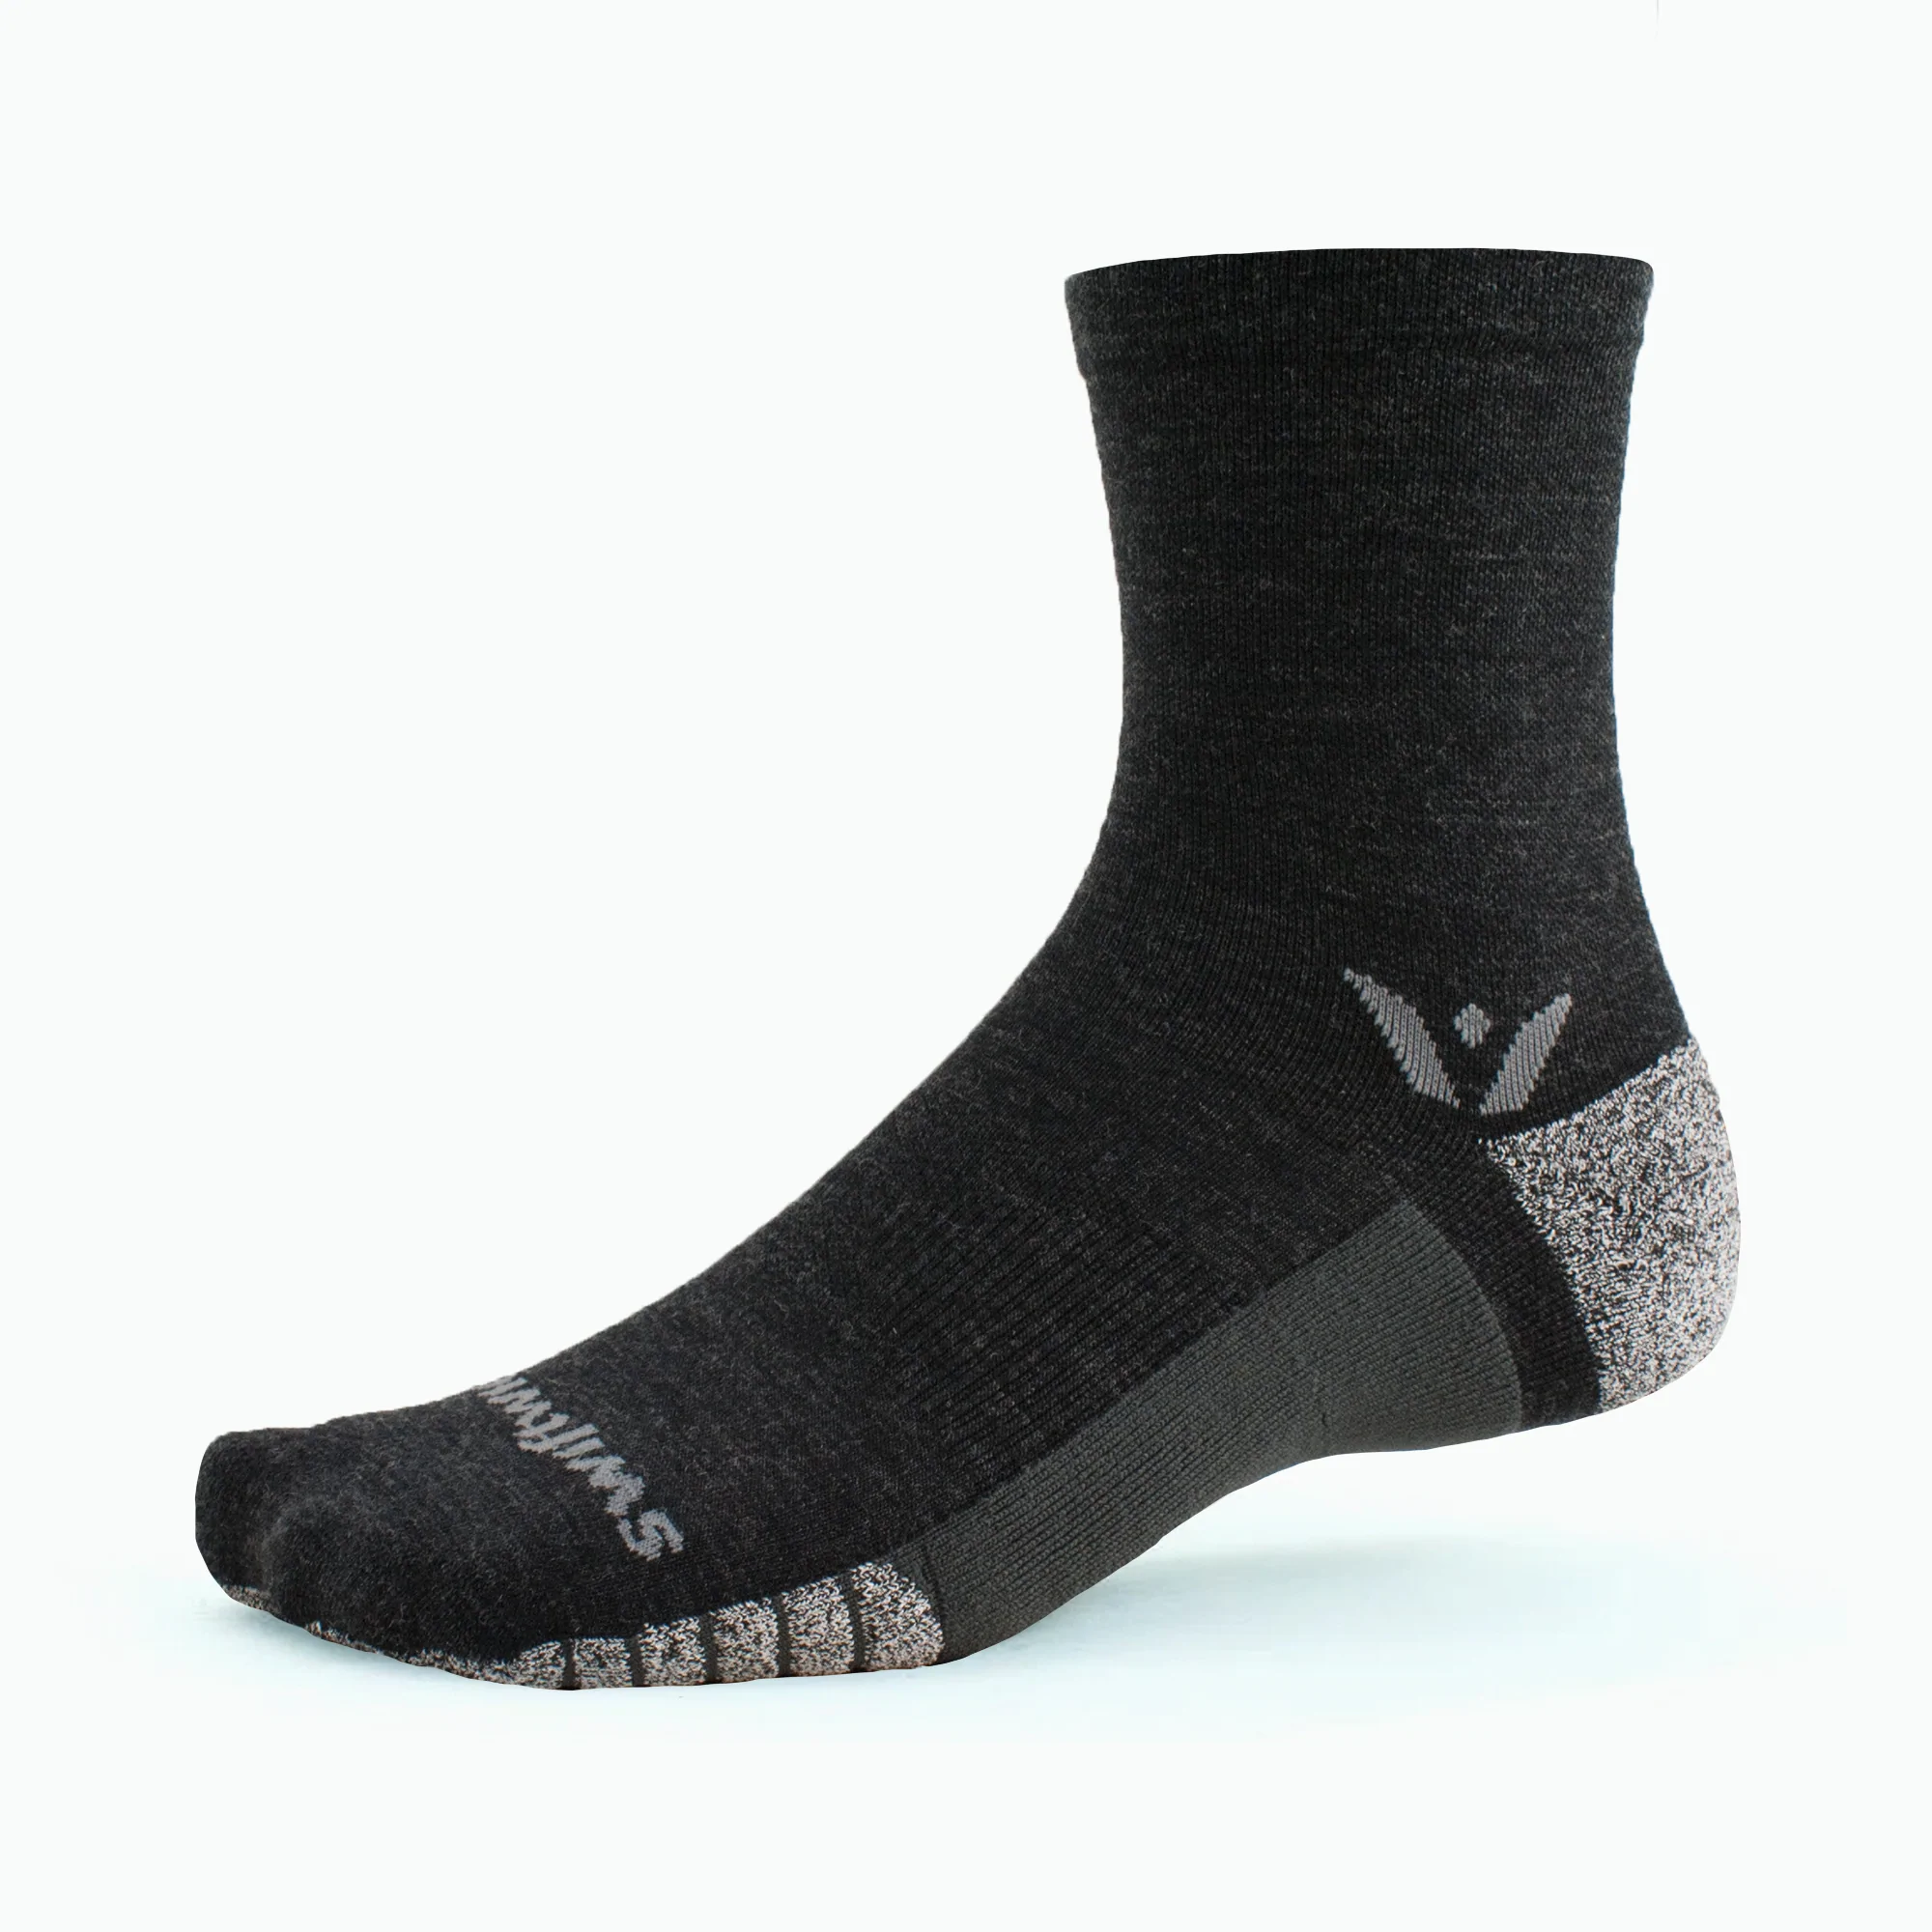 Charcoal swiftwick Flite XT Trail sock